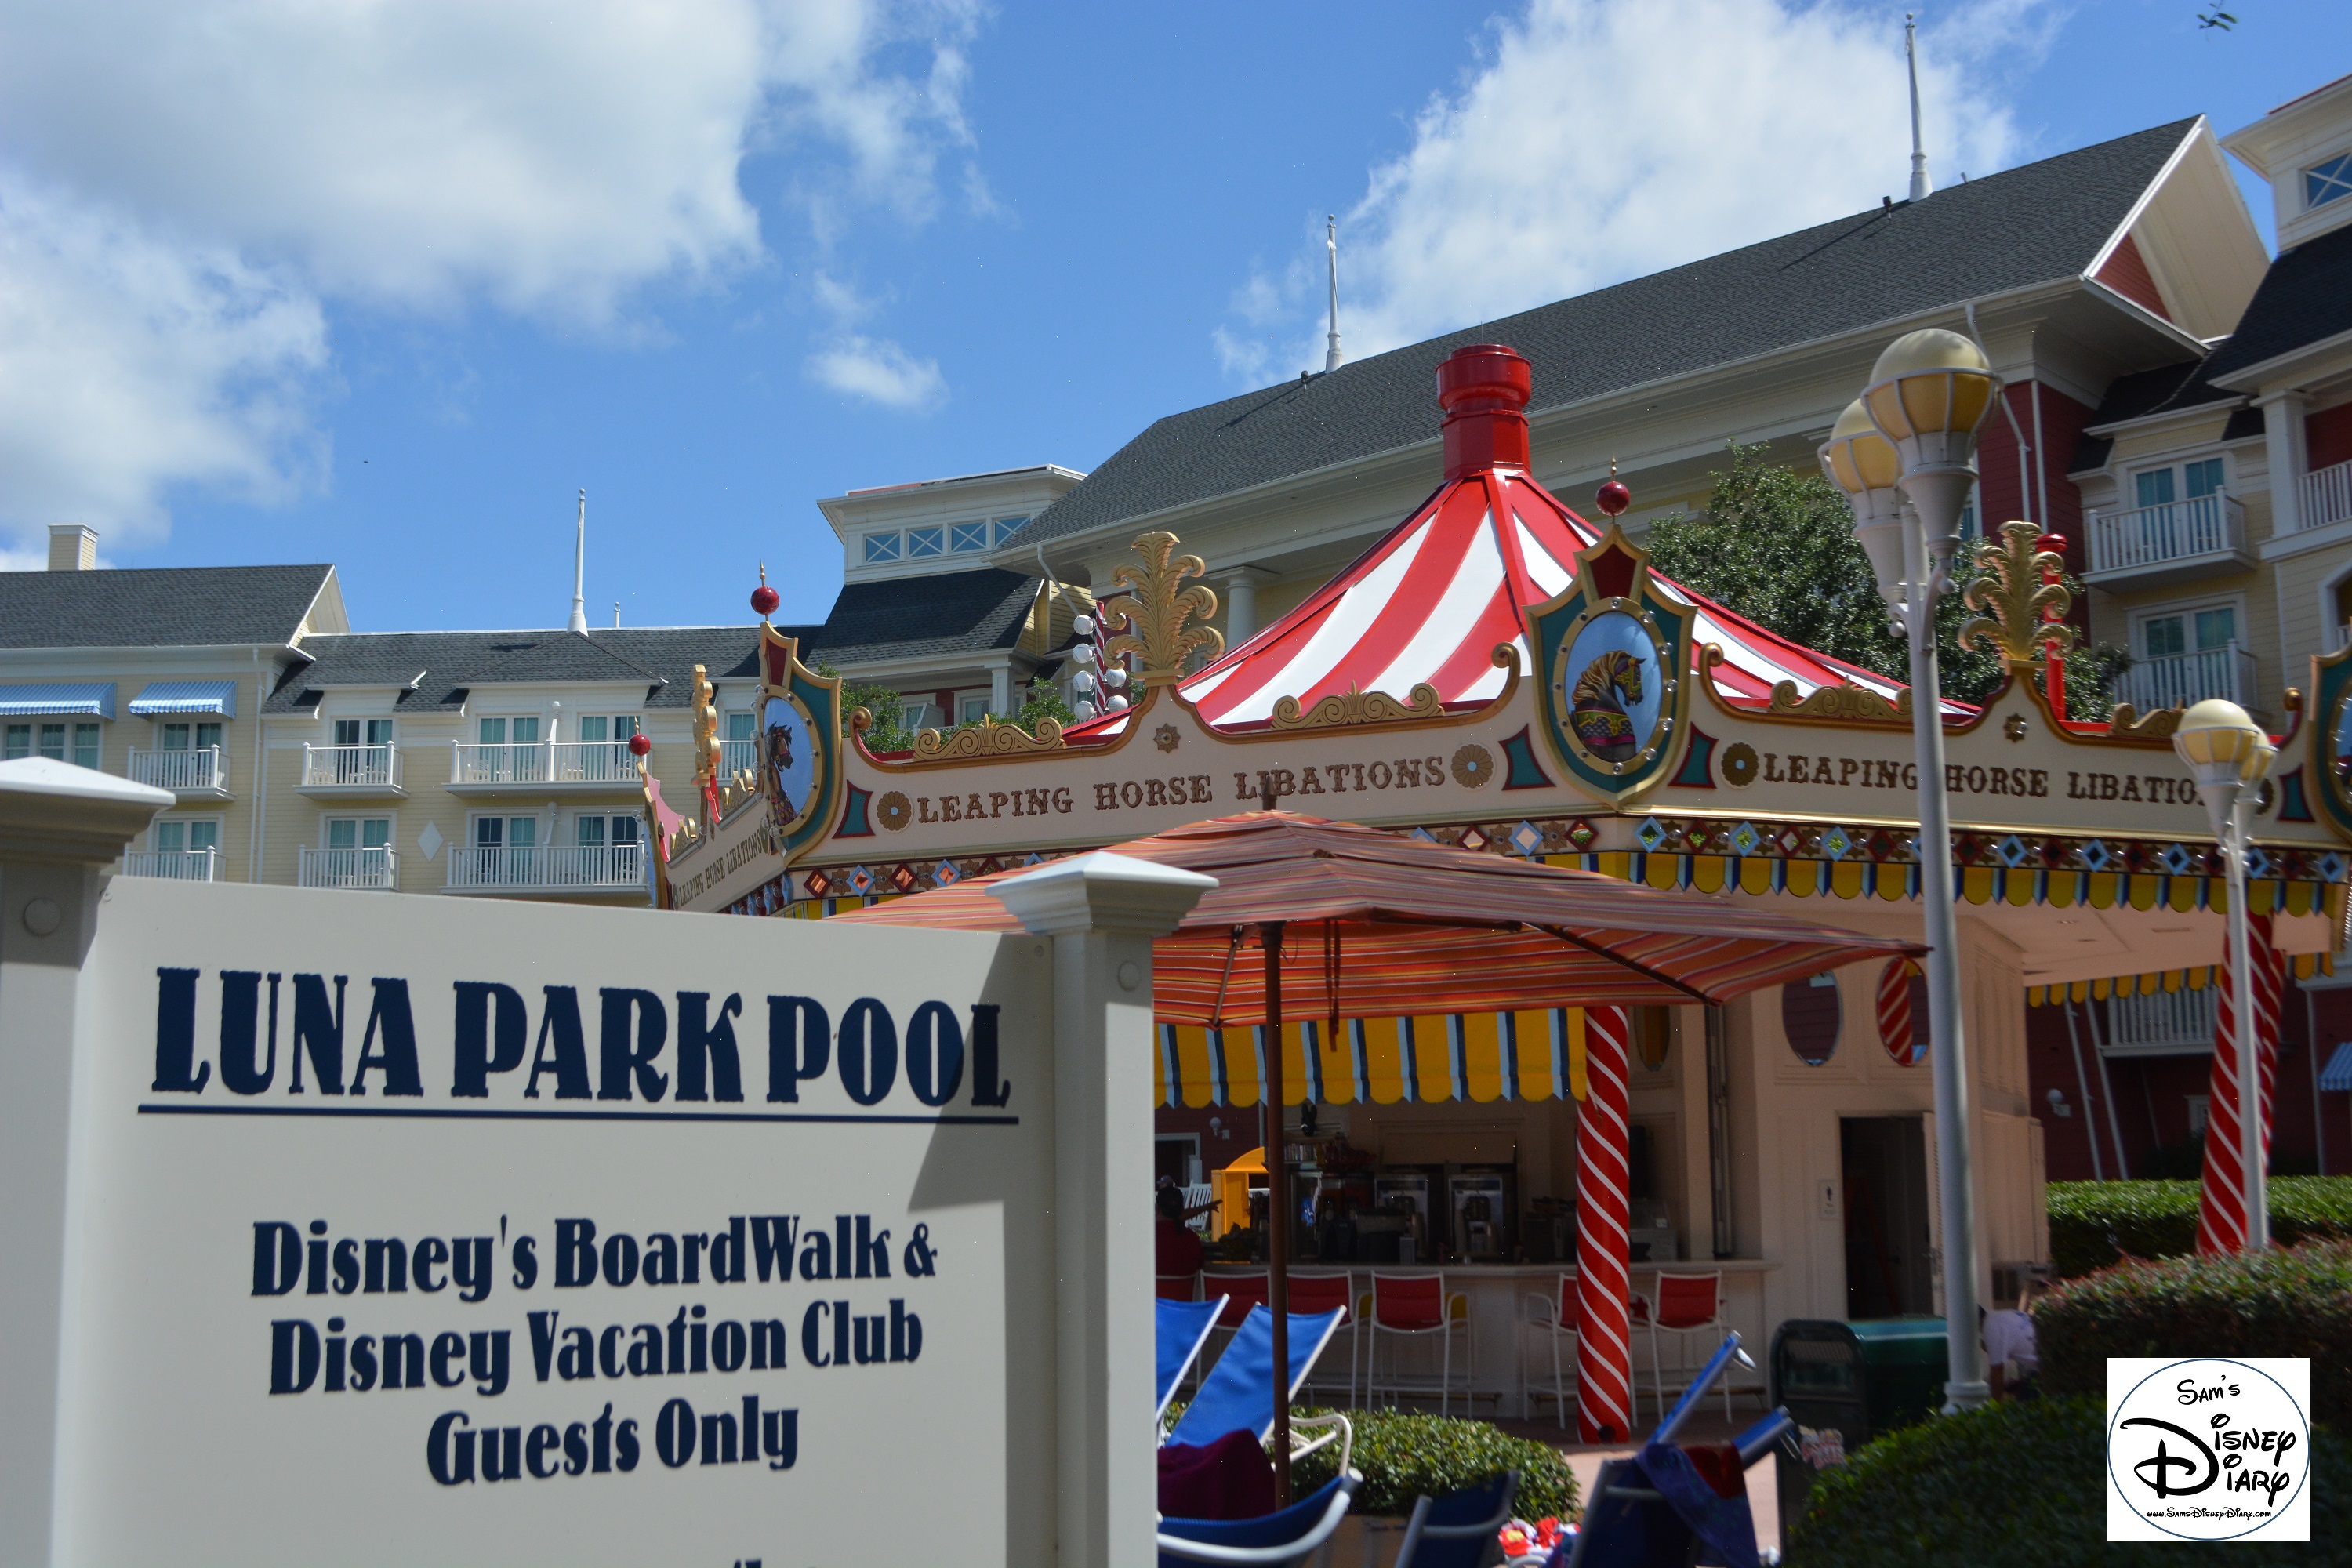 Luna Park Pool at the Walt Disney World Boardwalk